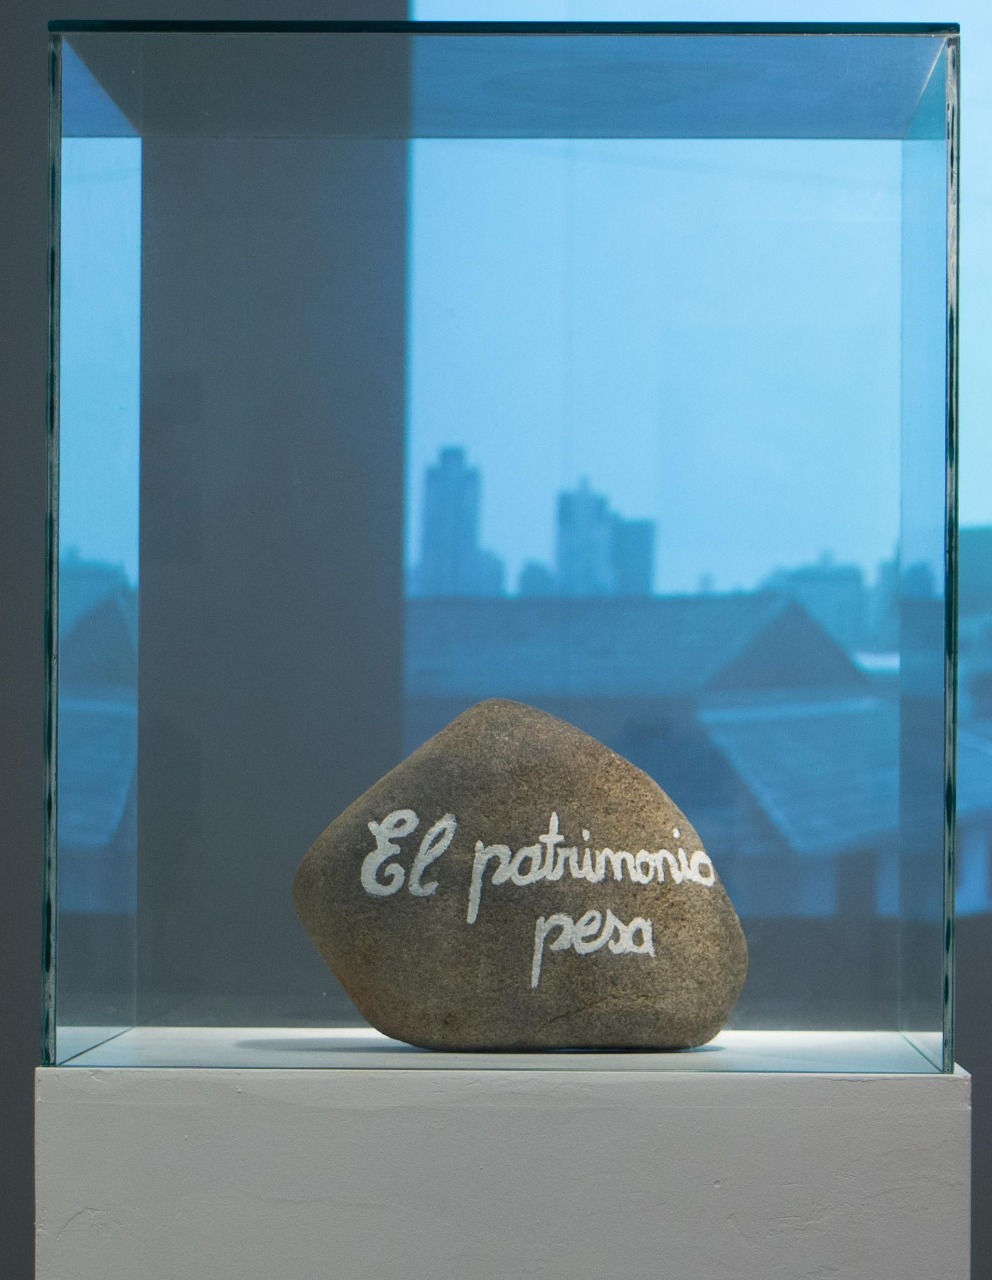 El patrimonio pesa, Perla Ramos, 2017. Apropriação, 12.8 x 24 x 14 cm, pedra patrimonial pintada.